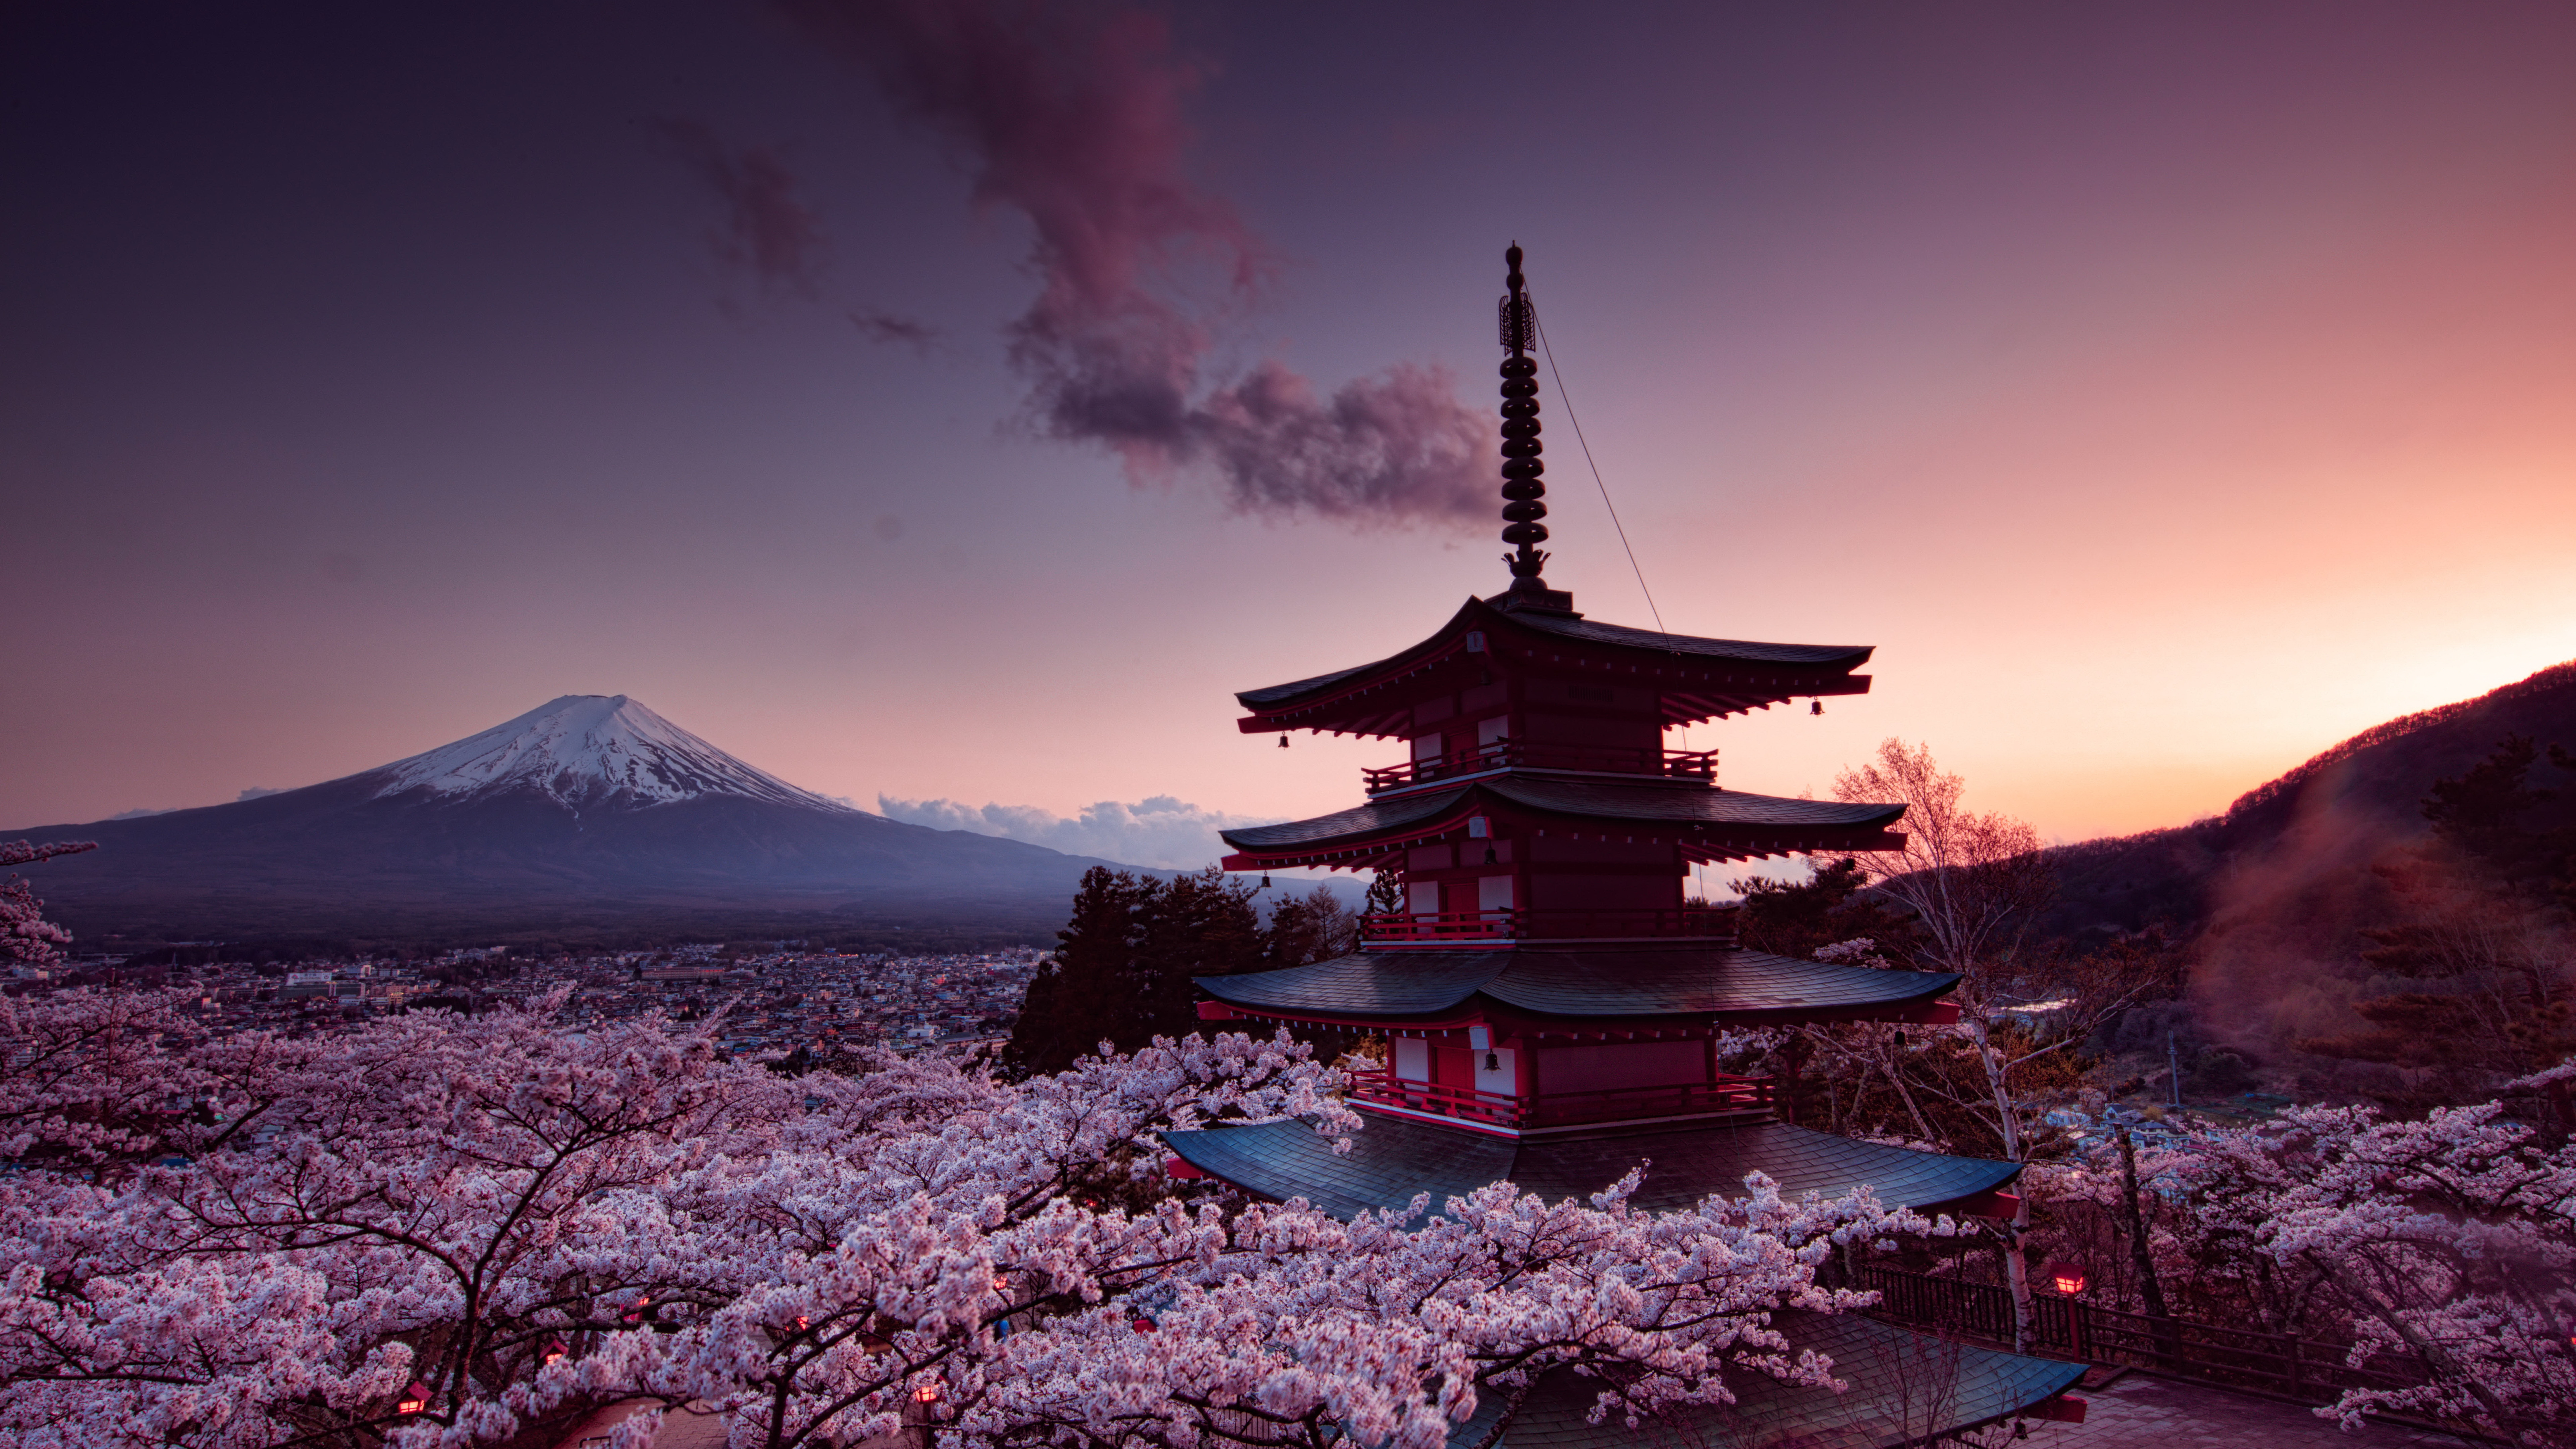 7680x4320 Churei Tower Mount Fuji In Japan 8k 8k HD 4k Wallpapers ...